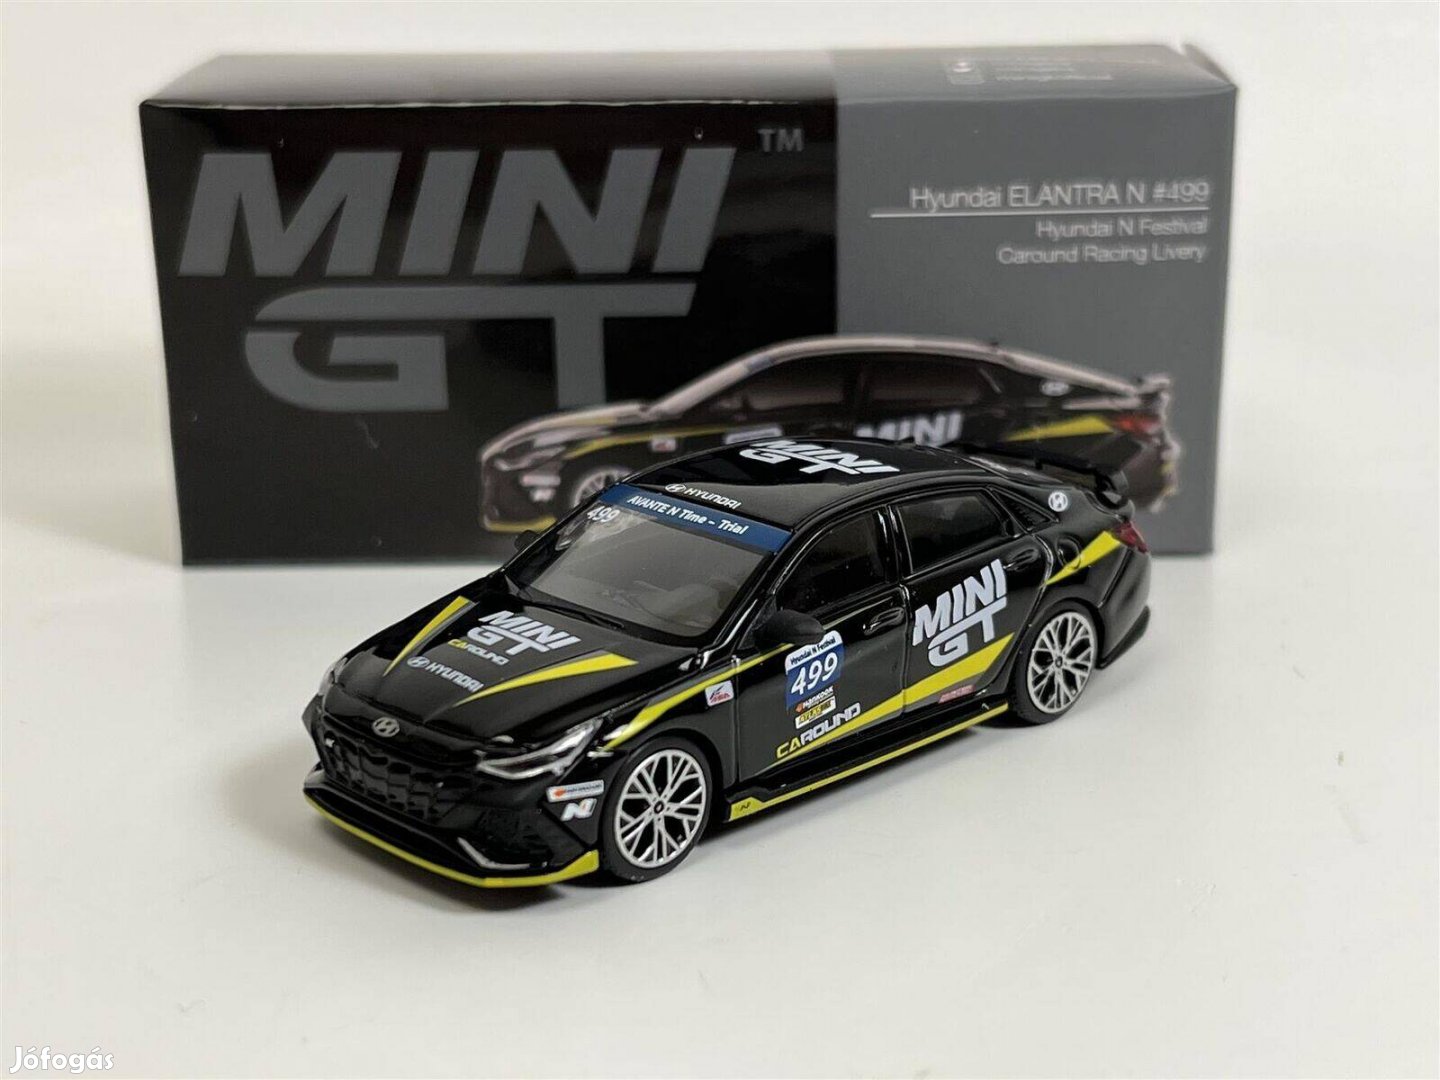 Mini GT MGT00403 Hyundai Elantra N #499 Caround Racing Hyundai